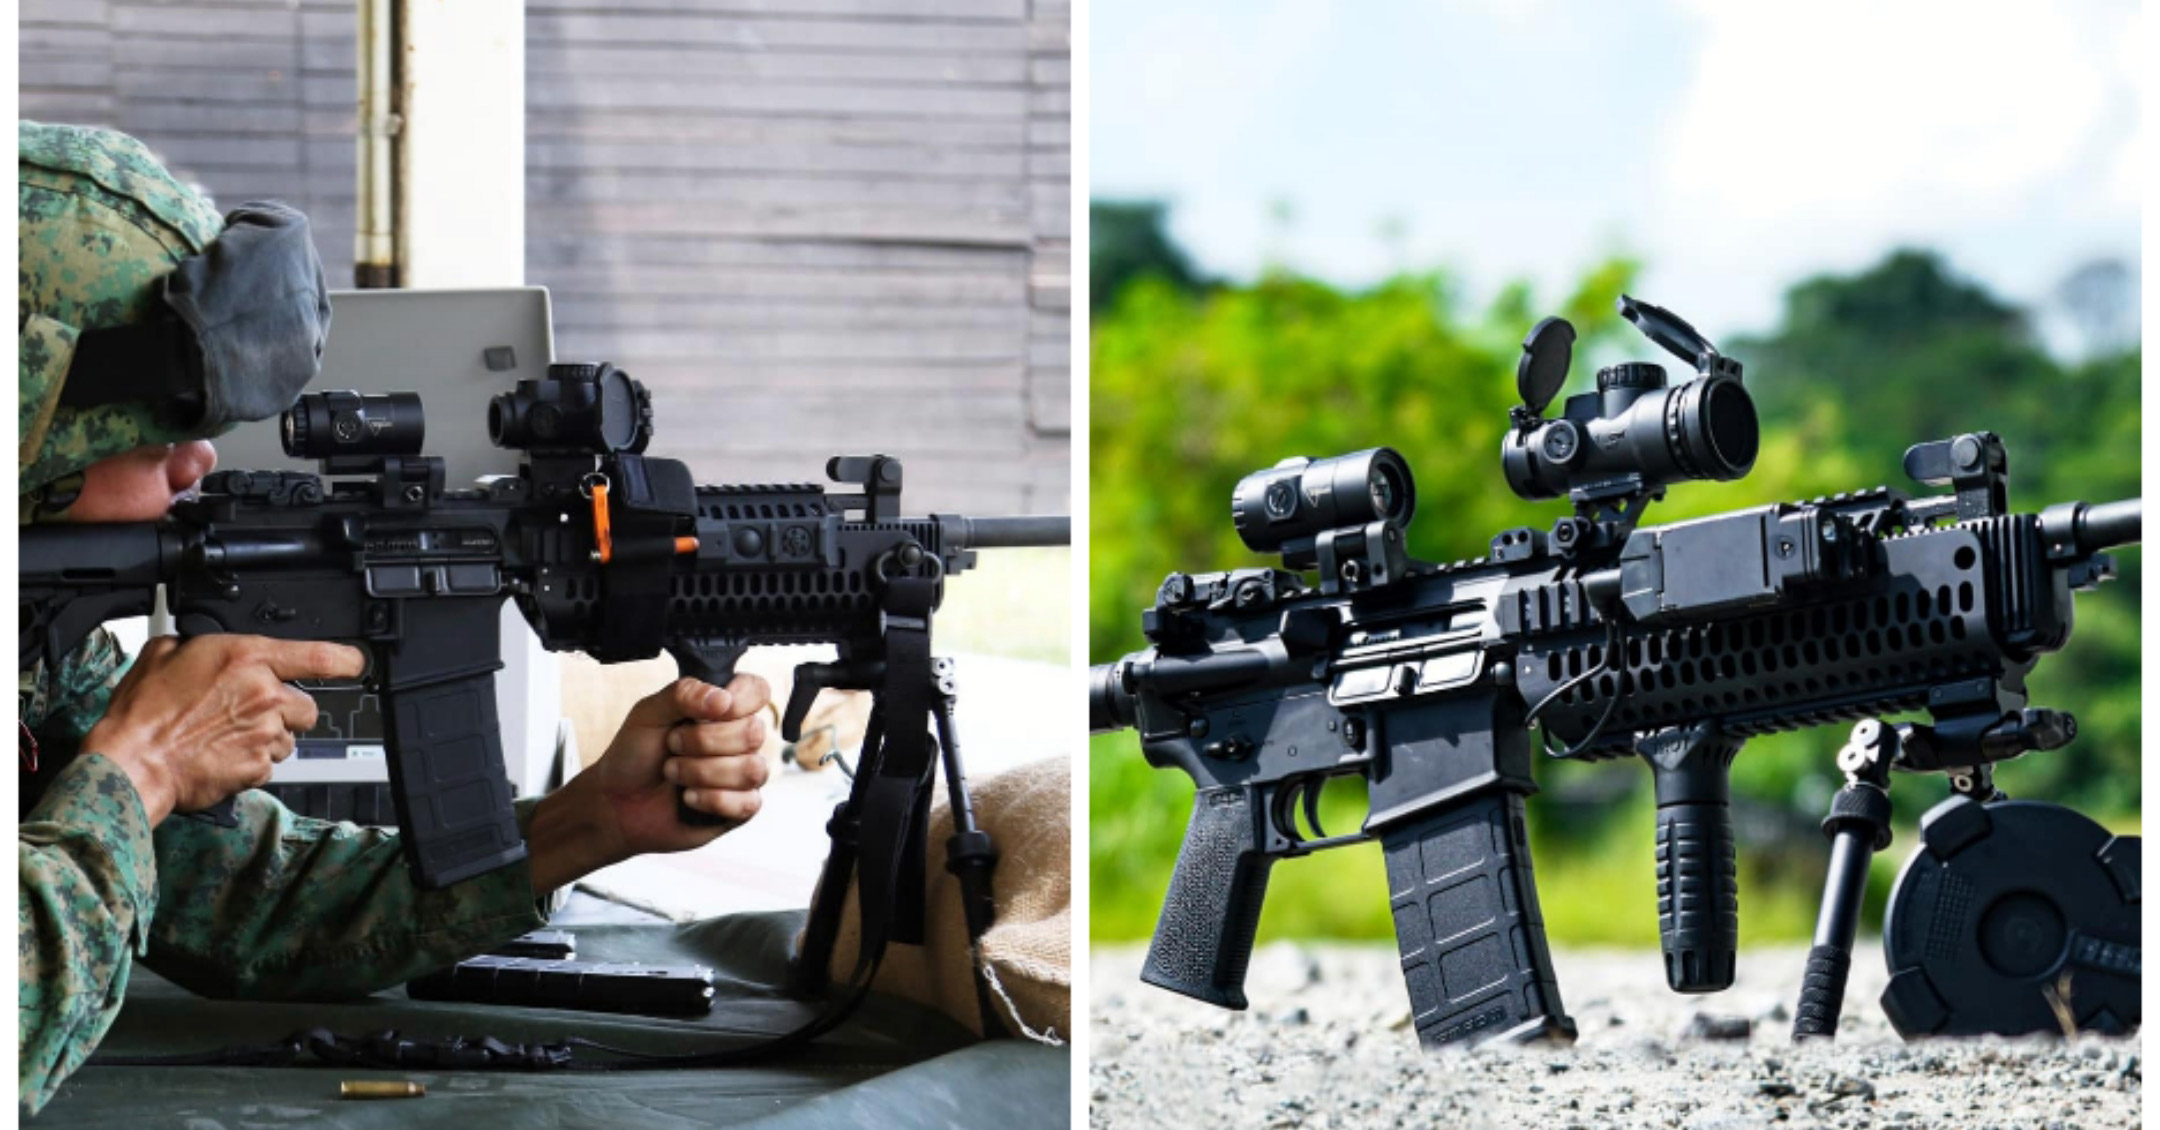 Singapore army unveils a new light machine gun